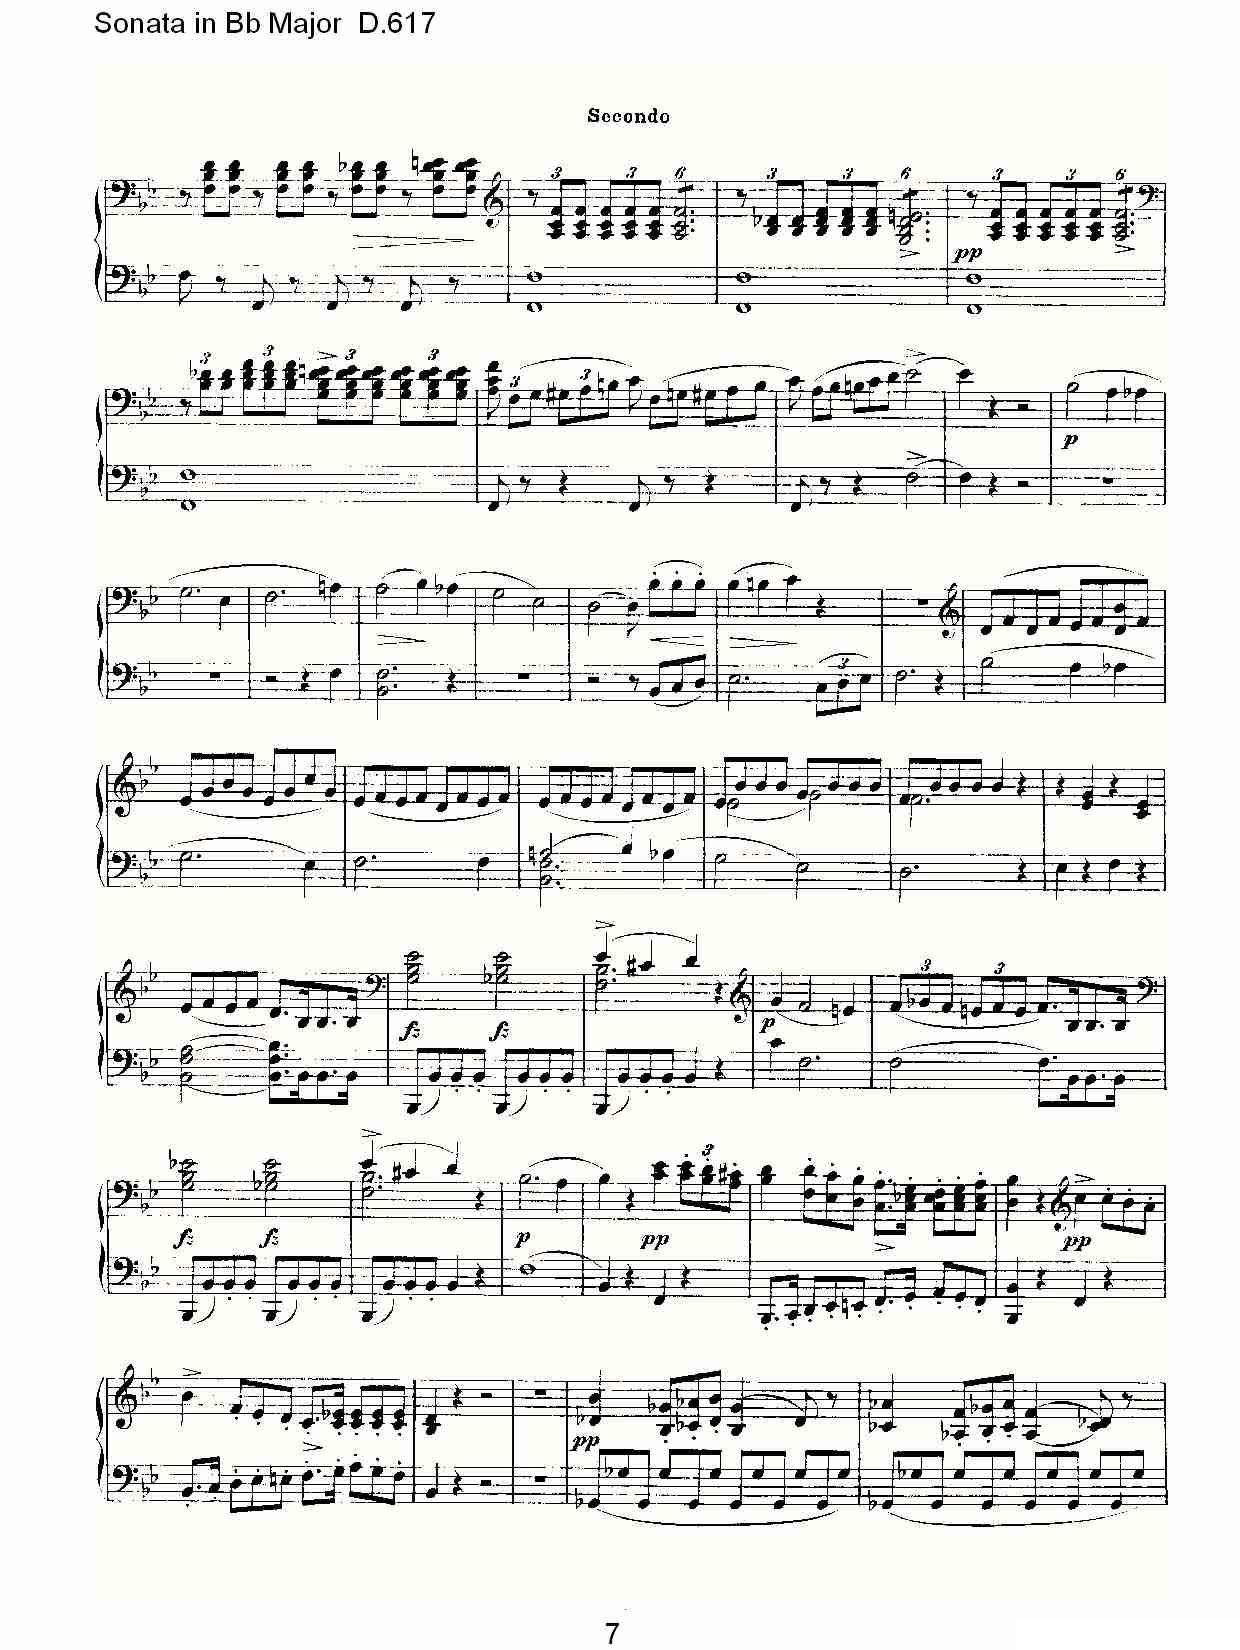 Sonata in Bb Major D.617（Bb大调奏鸣曲 D.617）钢琴曲谱（图7）